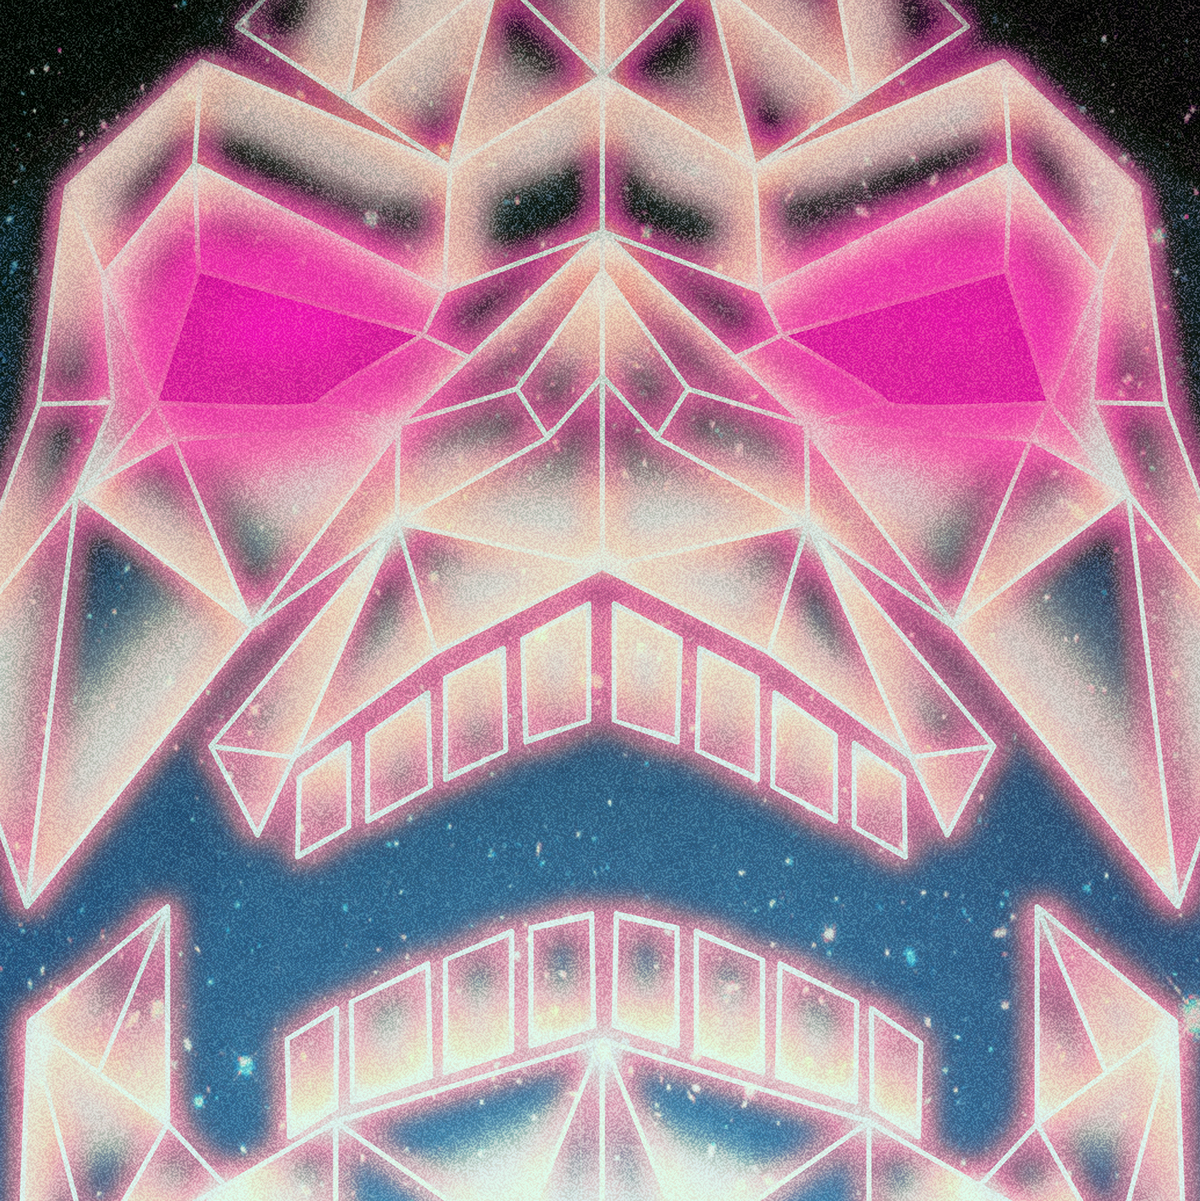 80s Retro futuristic he-man masters of the universe rad neon chrome wireframe landscape skeletor sci-fi eighties